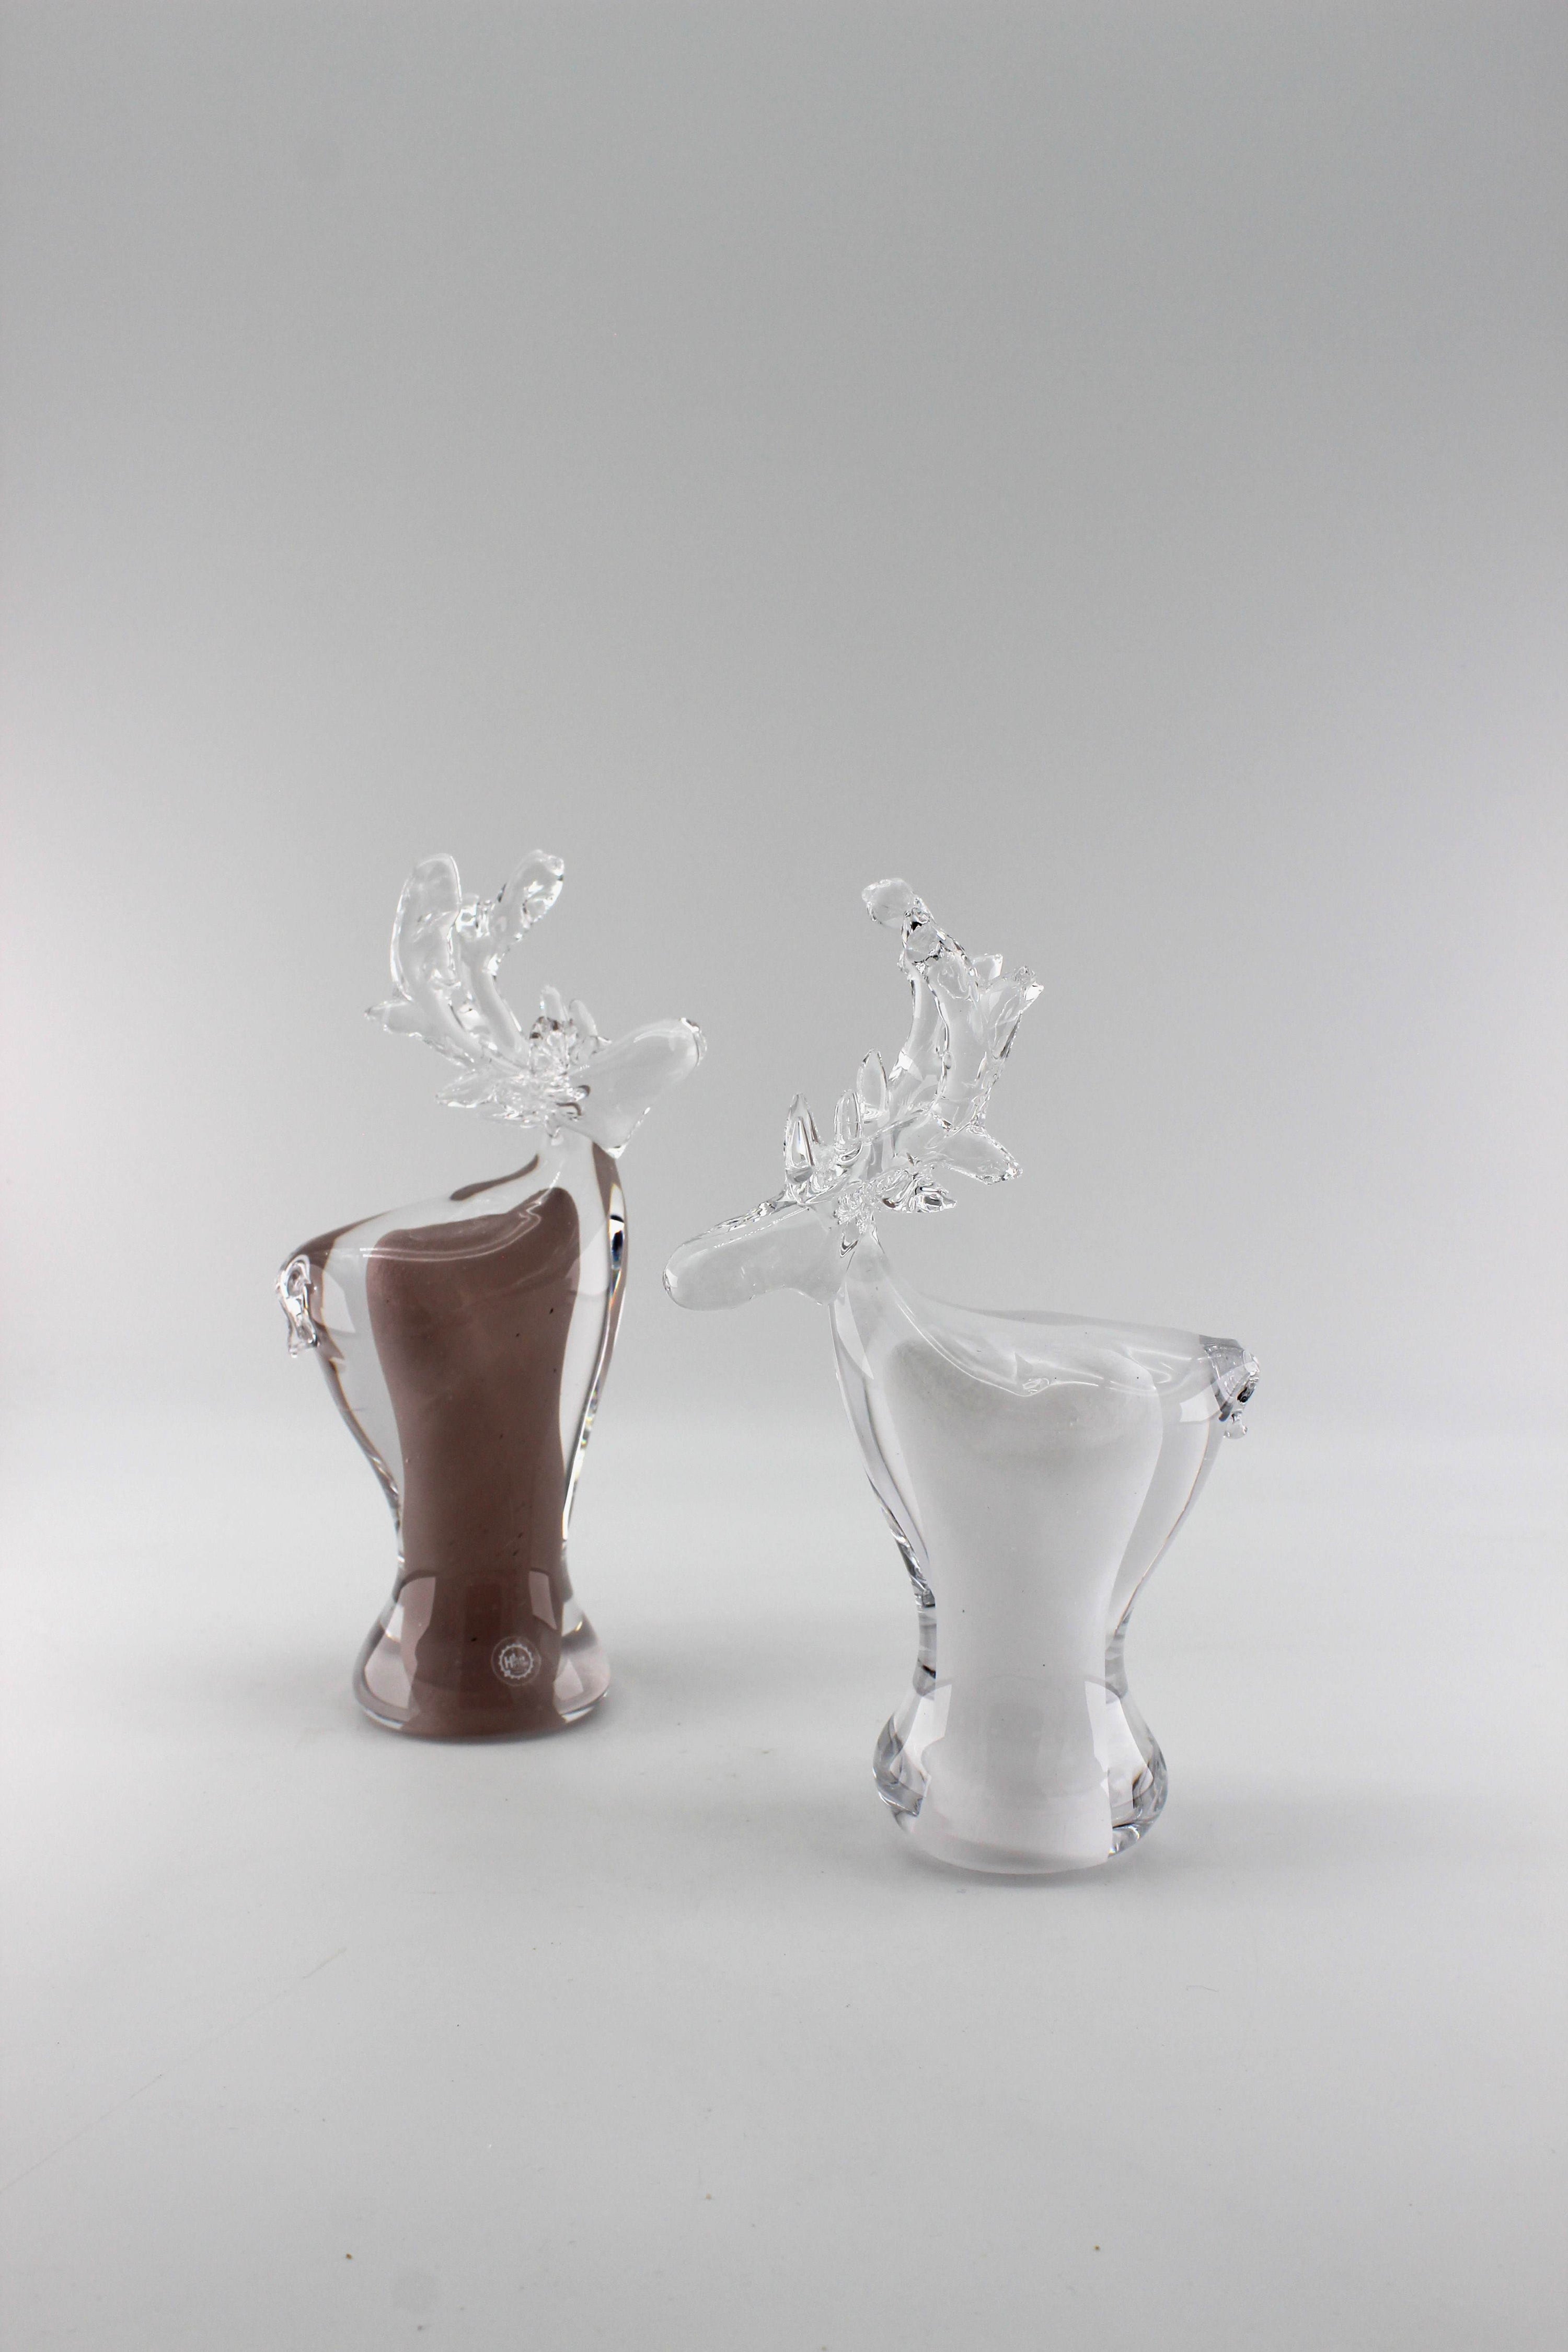 Moose and Reindeer - Glass sculpture